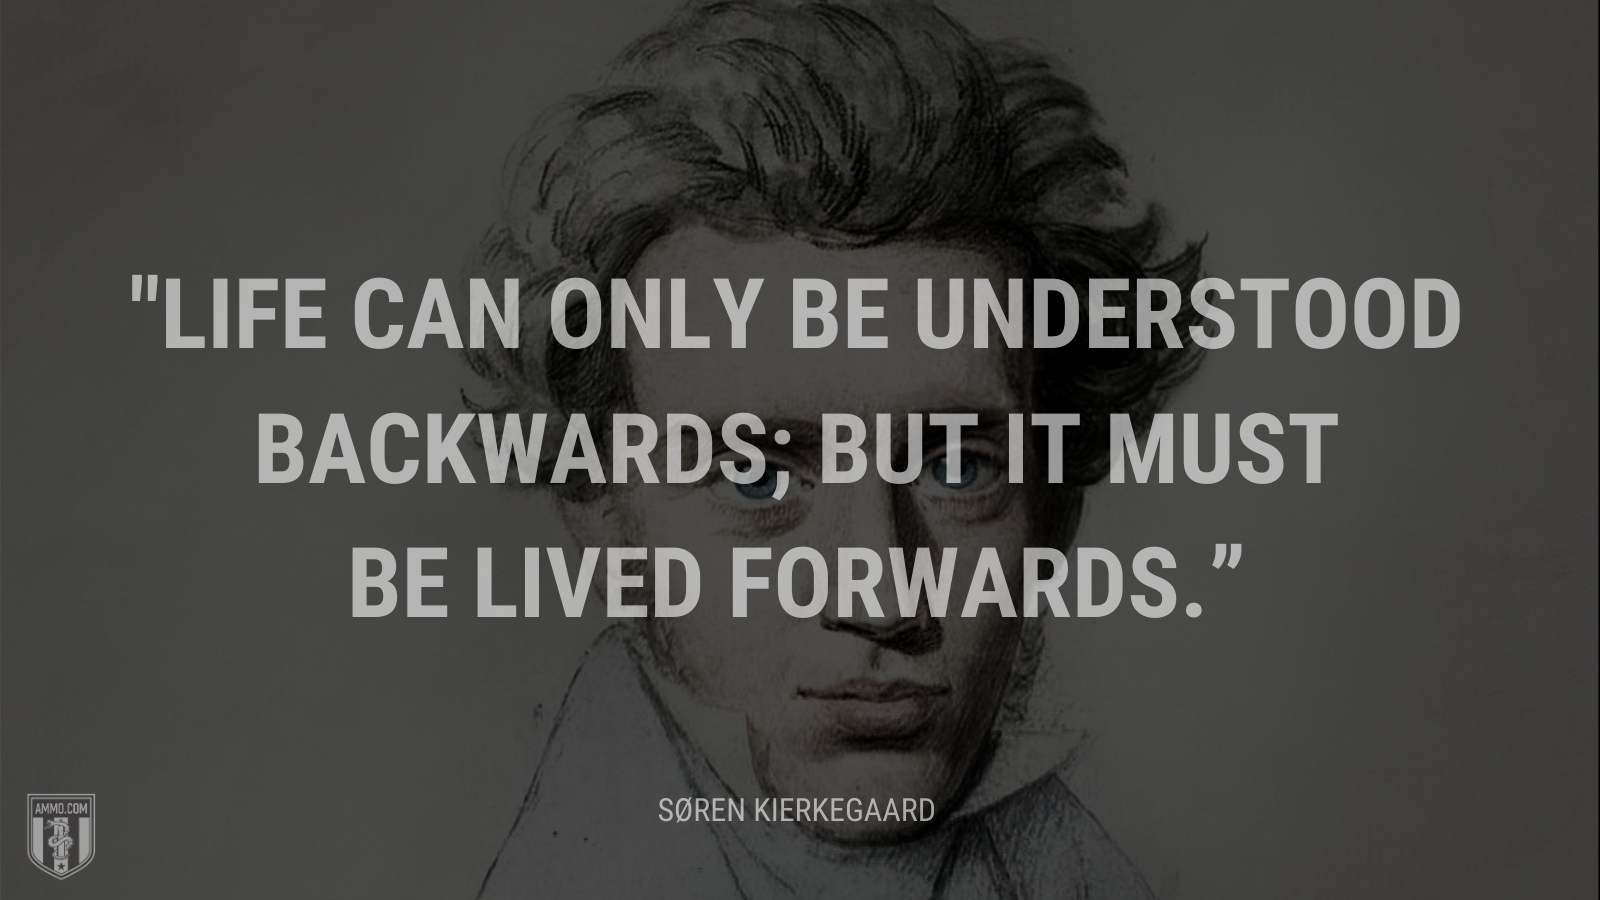 “Life can only be understood backwards; but it must be lived forwards.” - Søren Kierkegaard